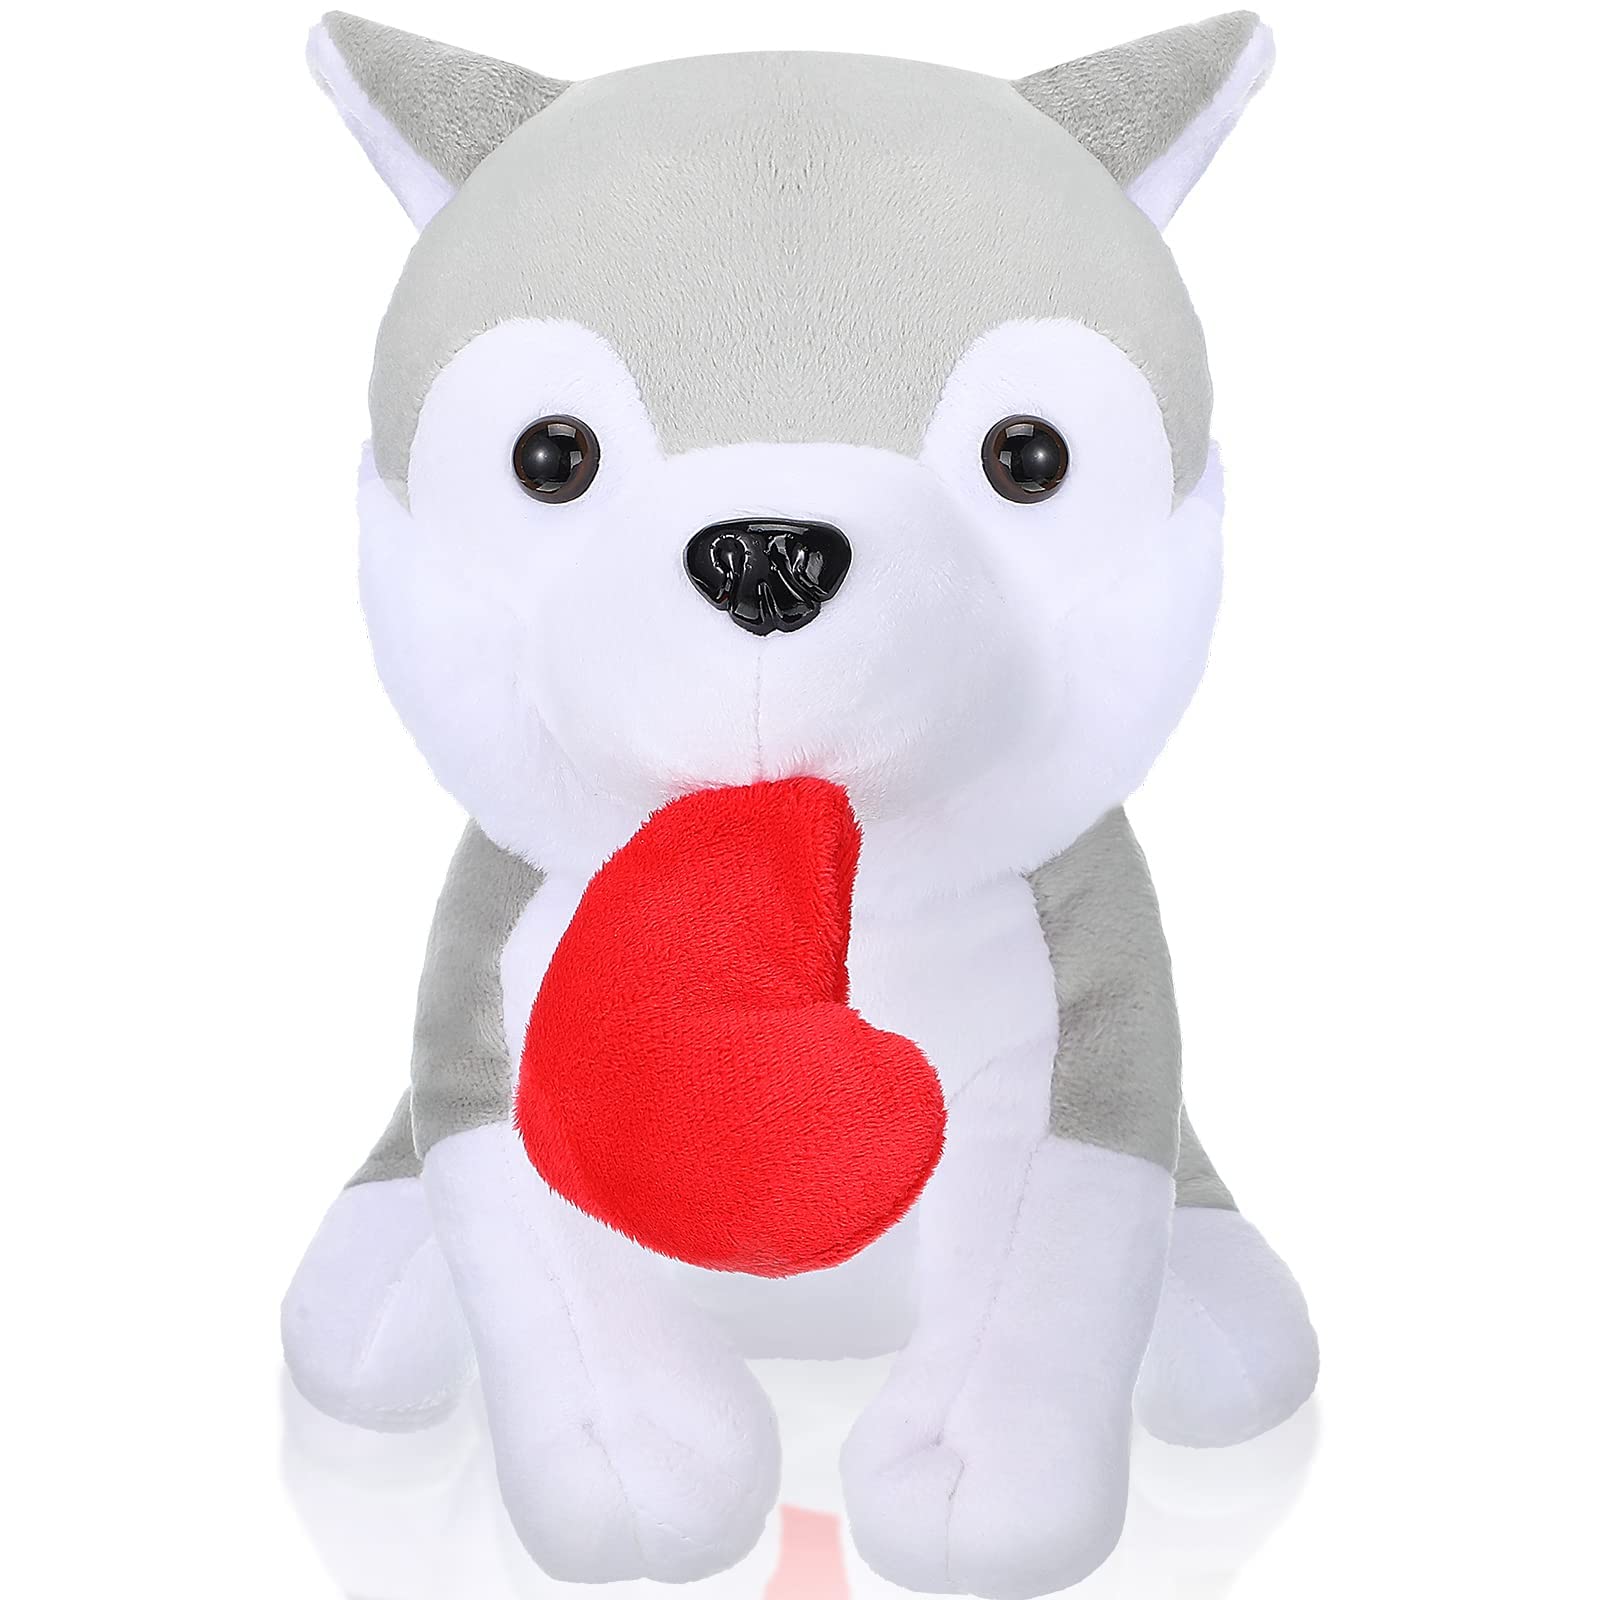 Adorable Husky plush with a heart